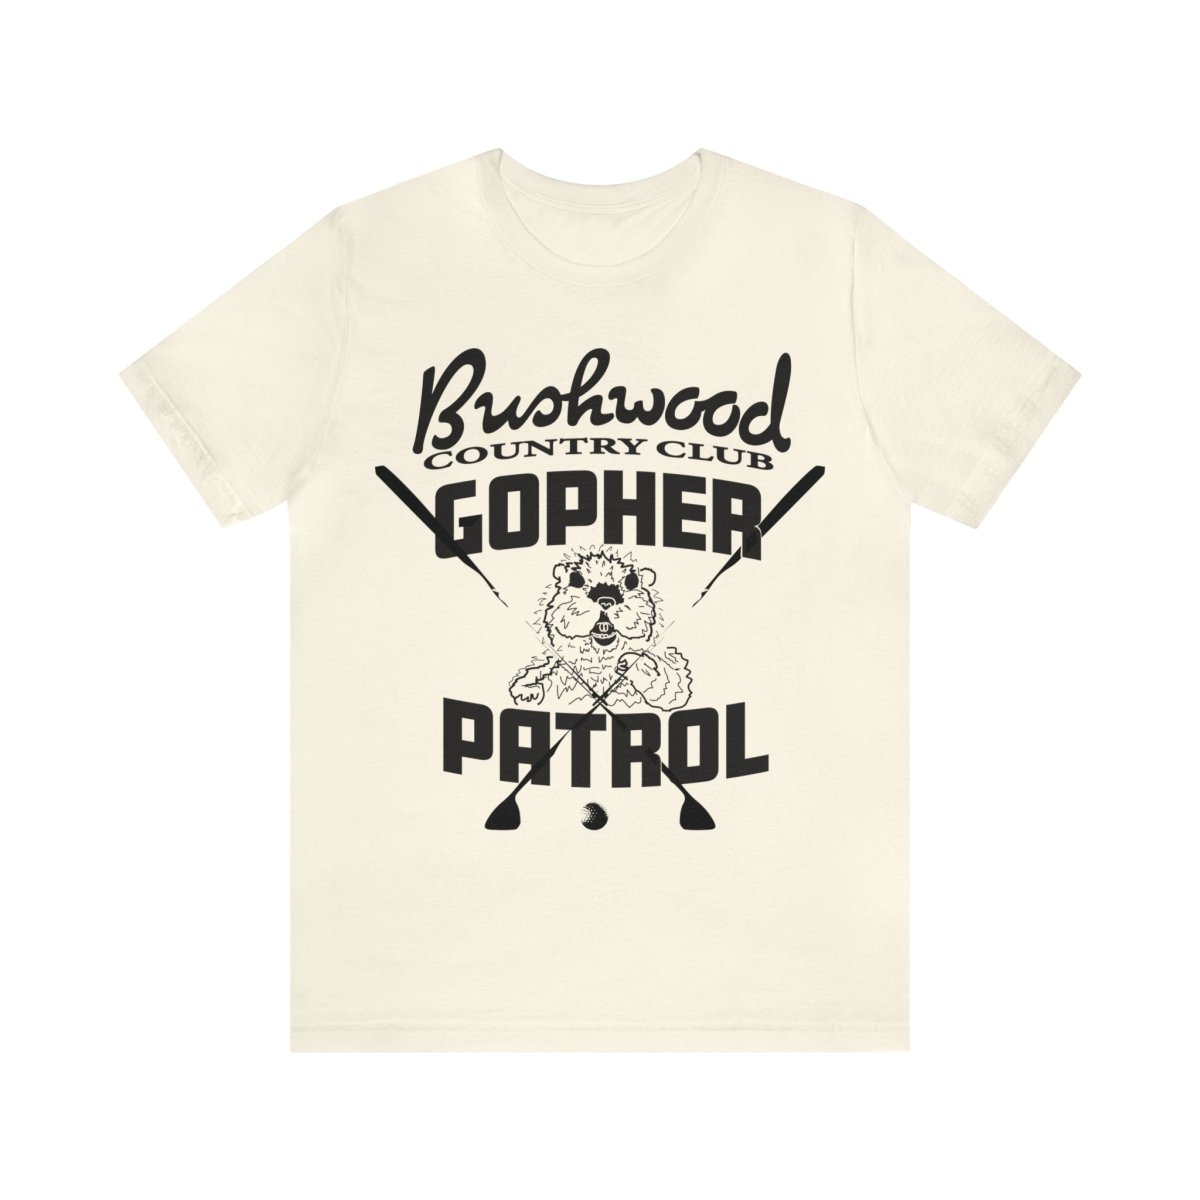 Bushwood Gopher Patrol Premium T-Shirt, Golf, Country Club, Funny